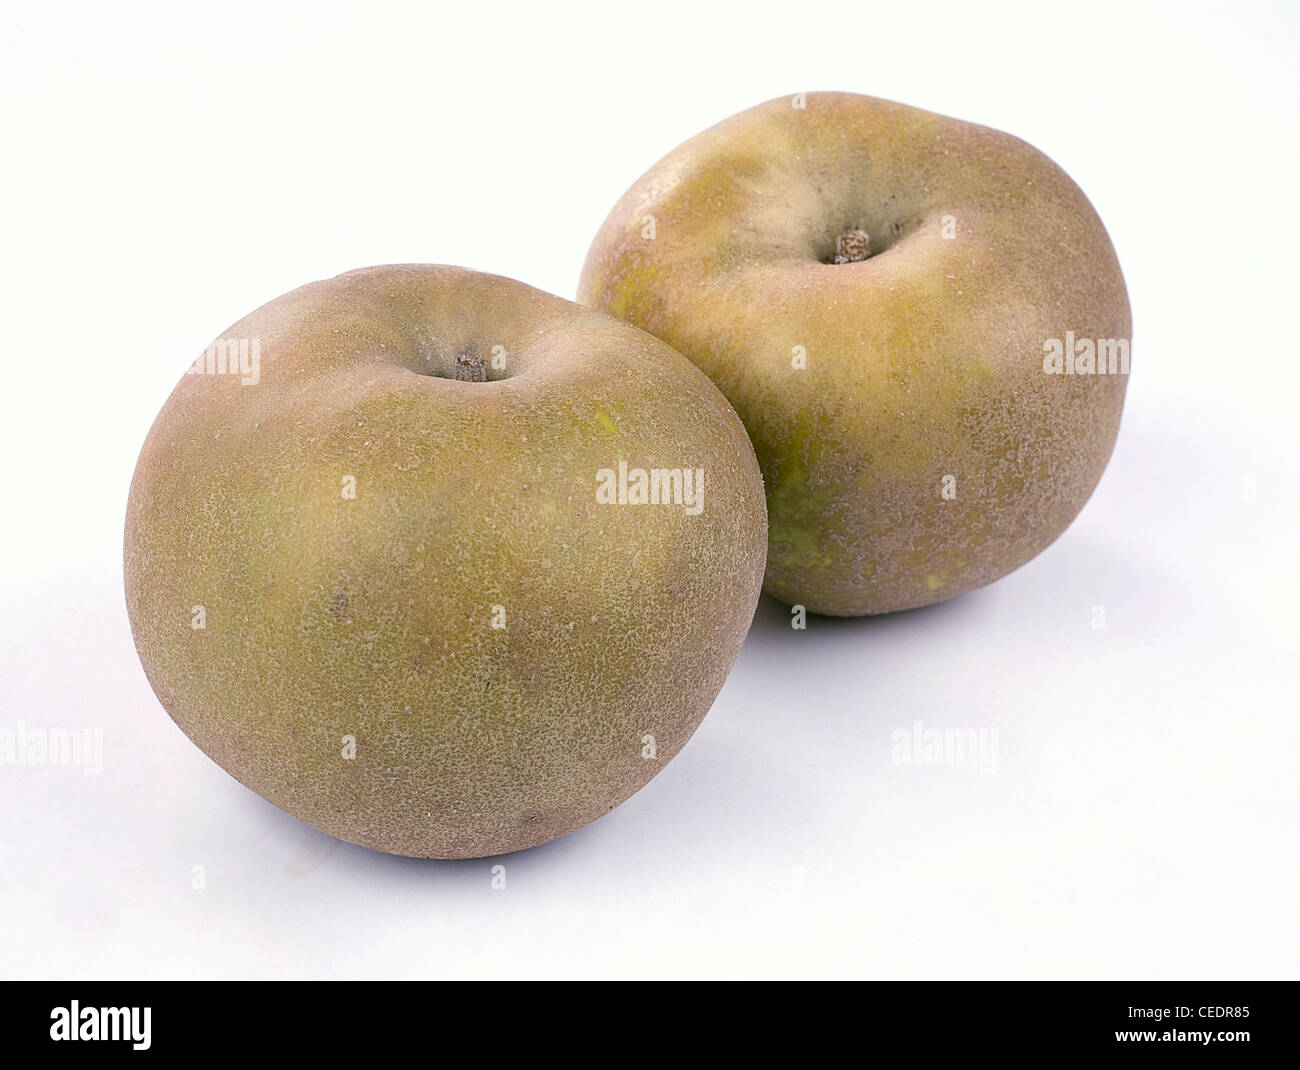 Reinette du Canada apples Stock Photo